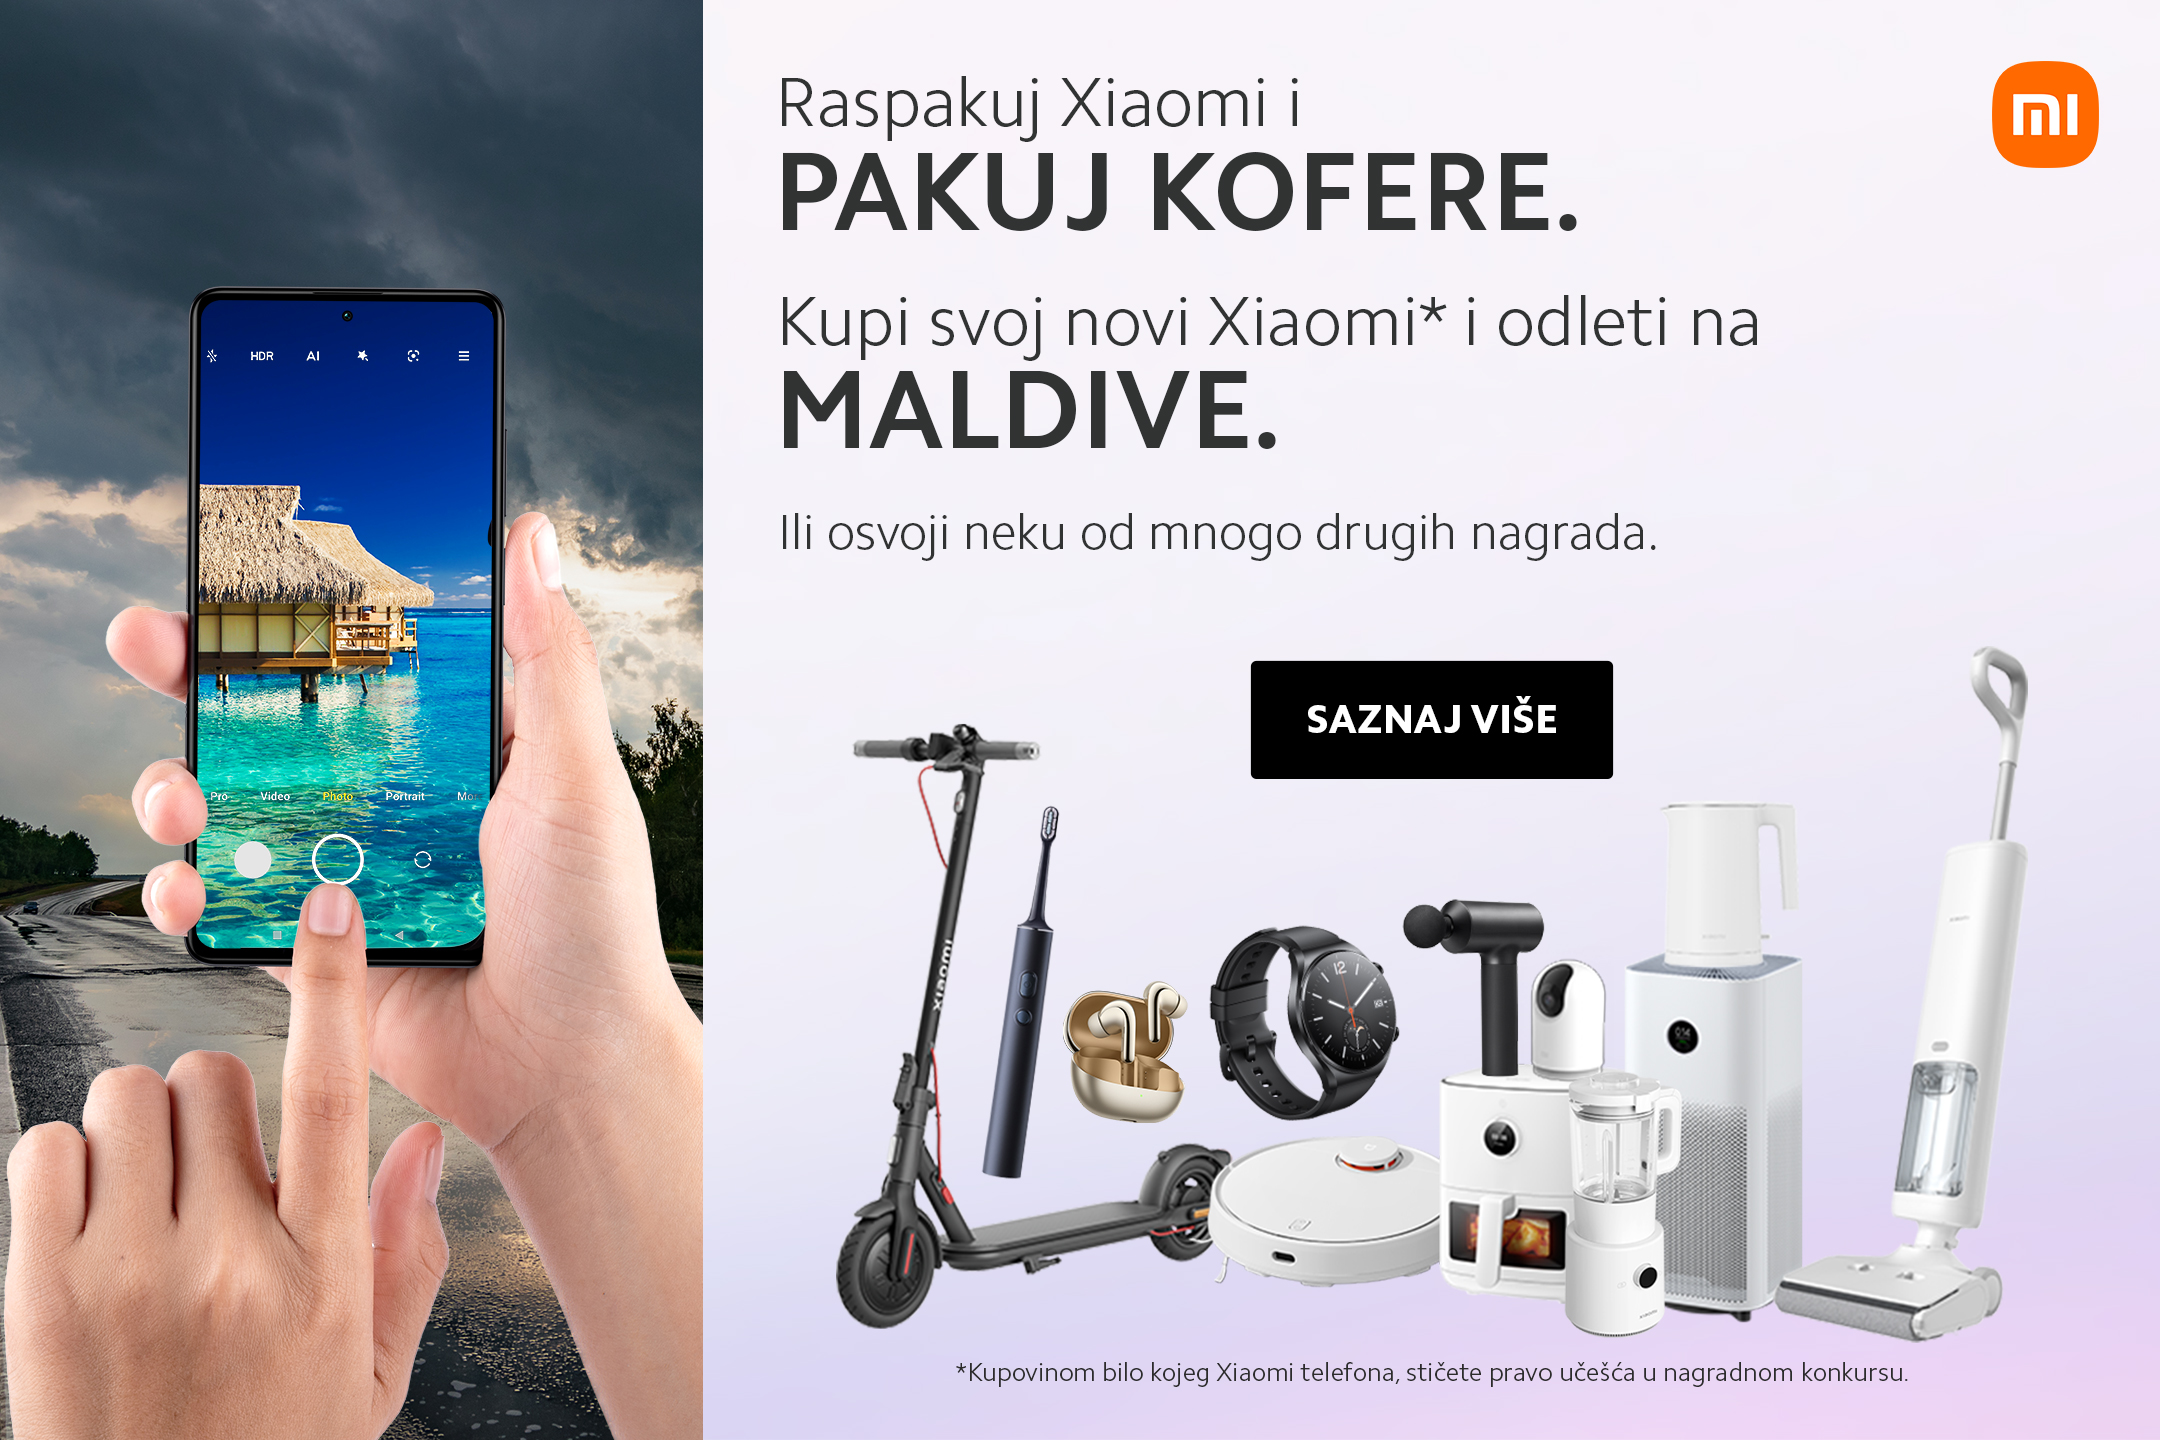 Raspakuj Xiaomi i pakuj kofere: Kupi svoj Xiaomi i odleti na Maldive 